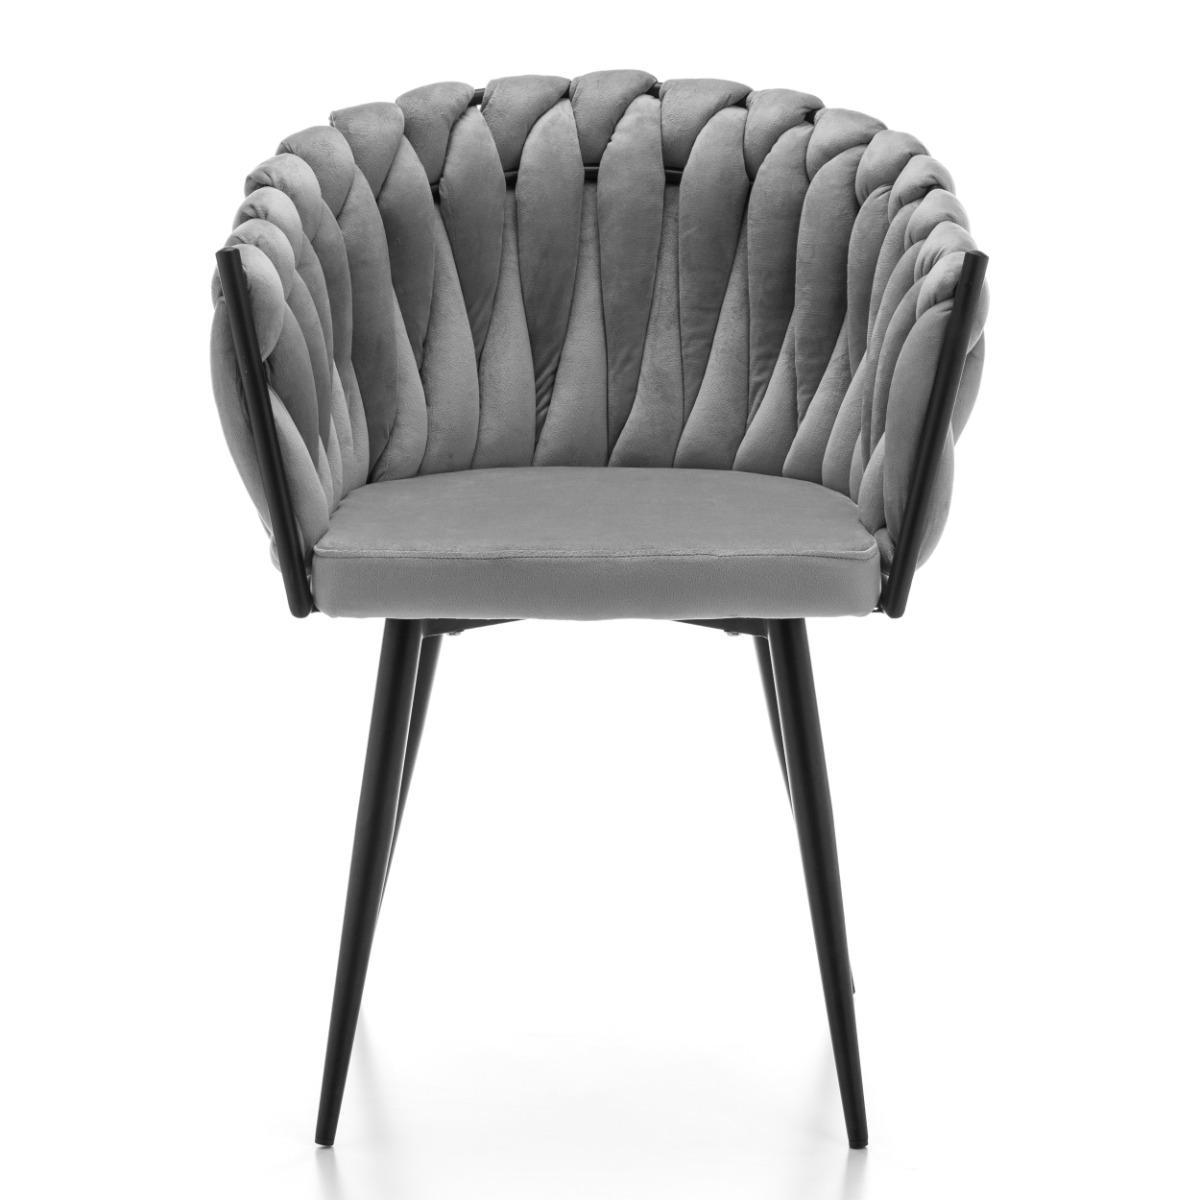 Krzesło LATINA jasnoszare welurowe glamour do jadalni lub salonu nr. 2